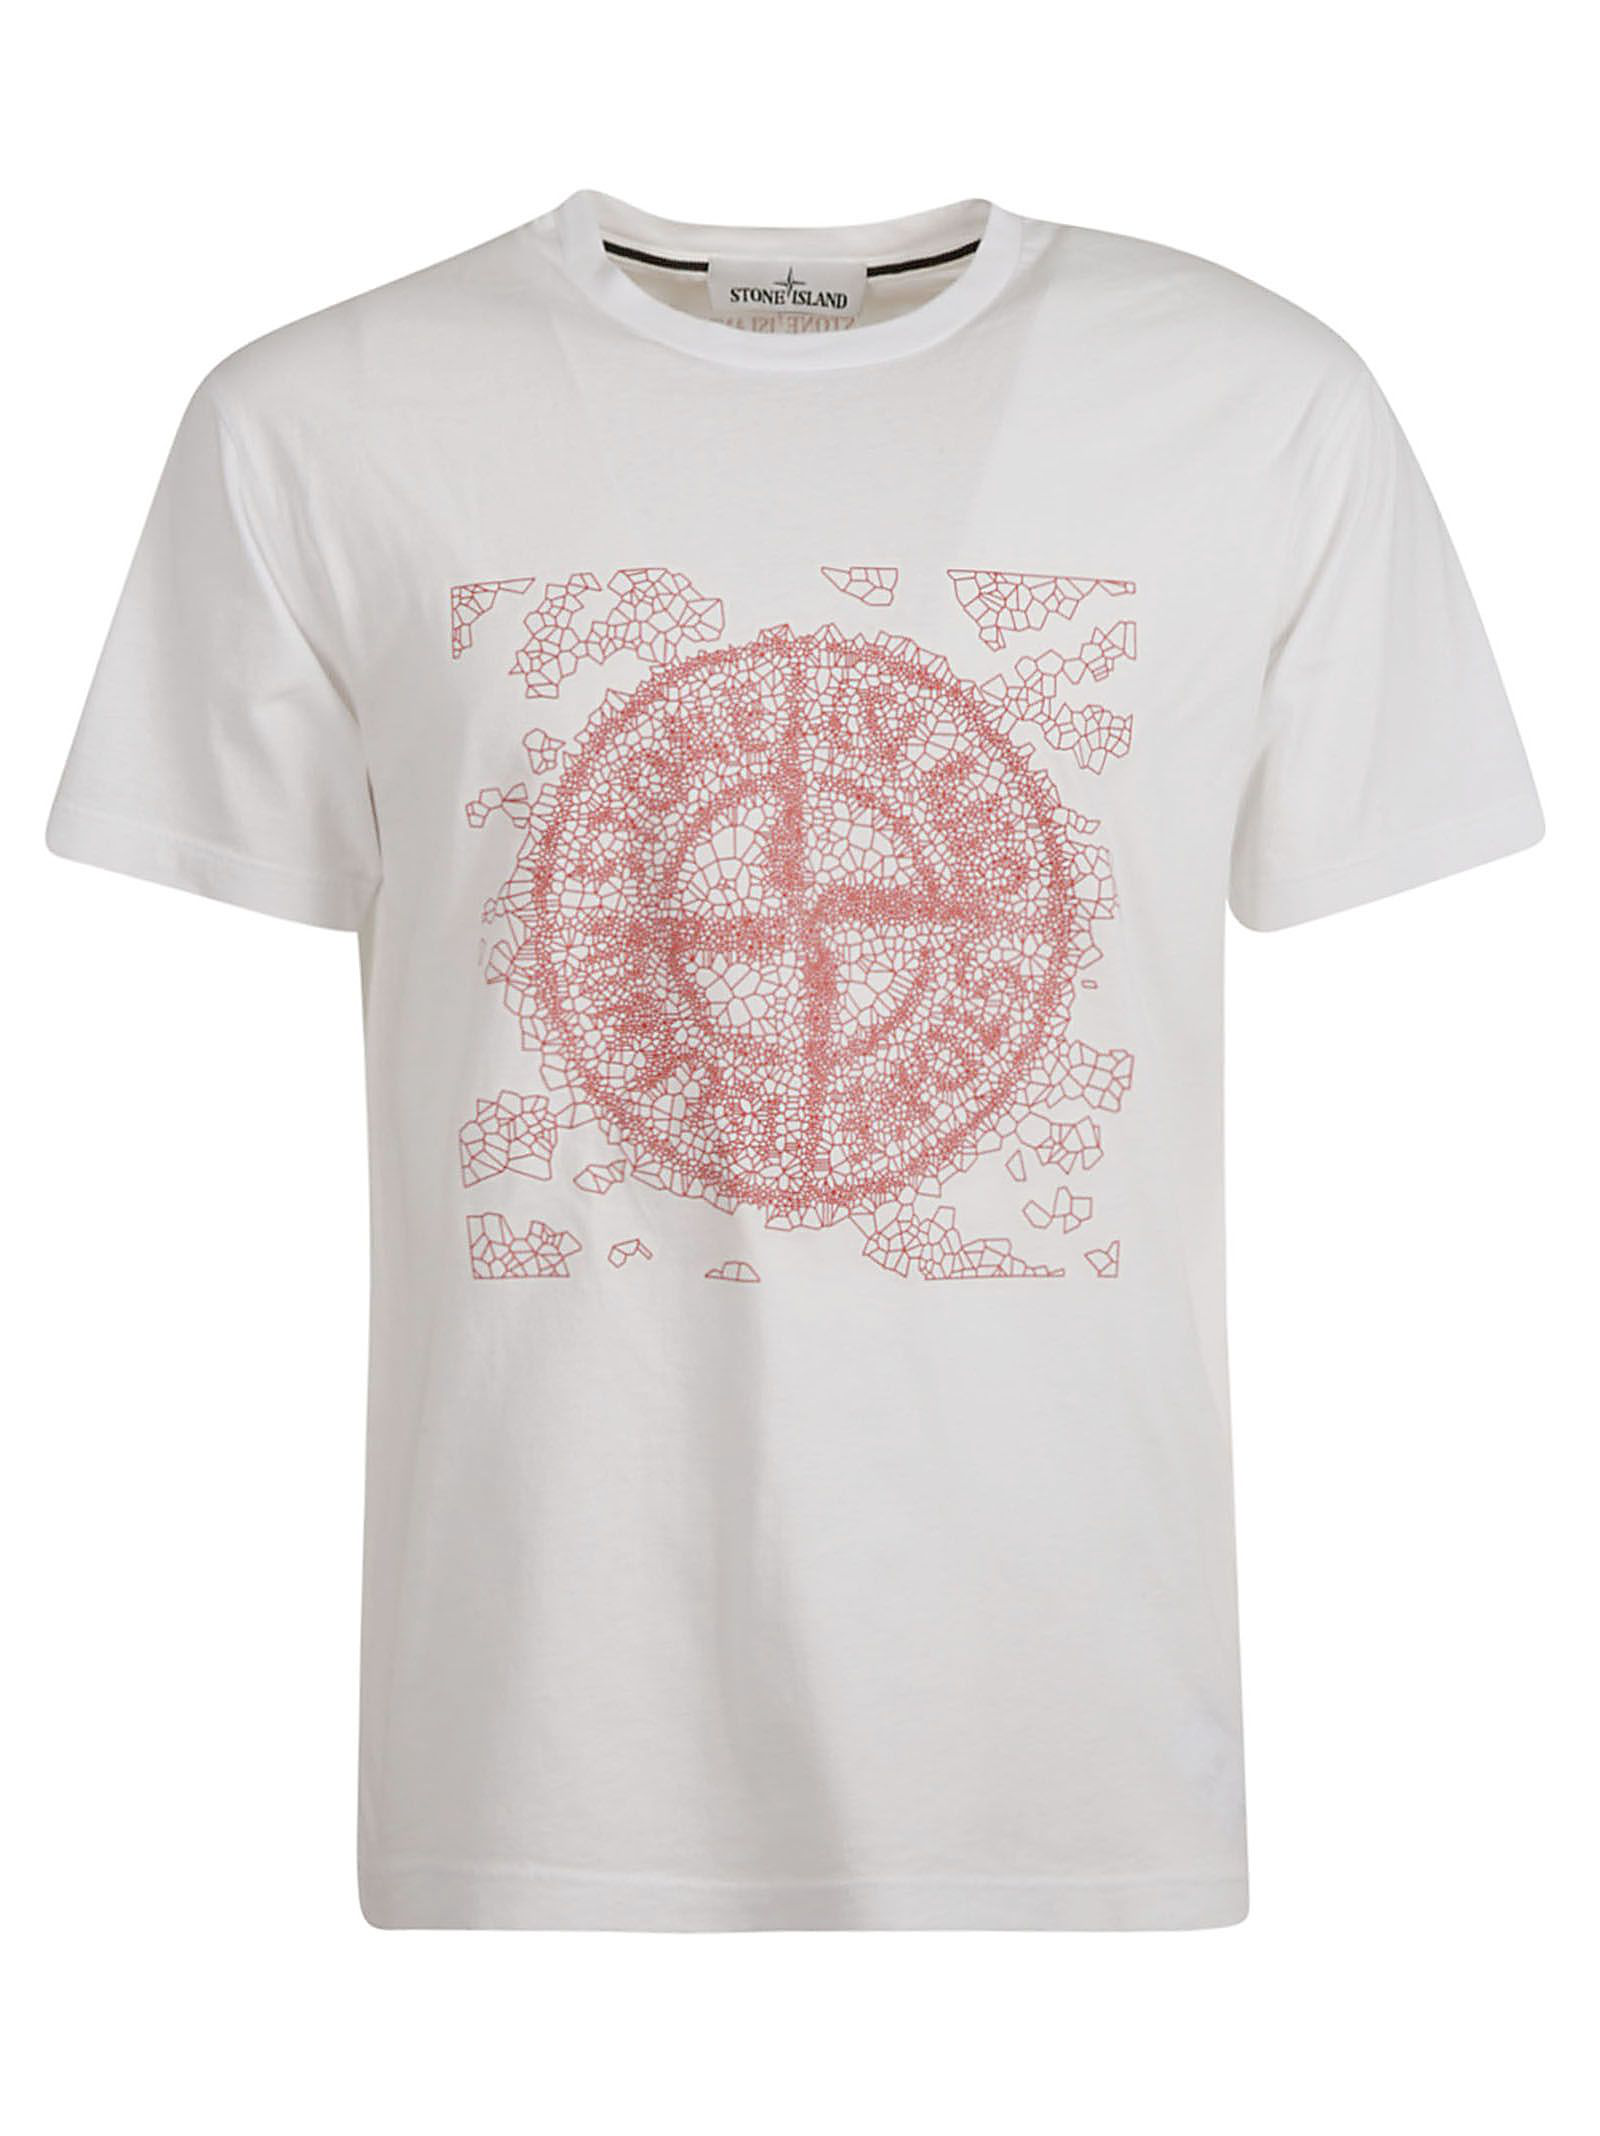 Stone Island Printed T-shirt In White | ModeSens